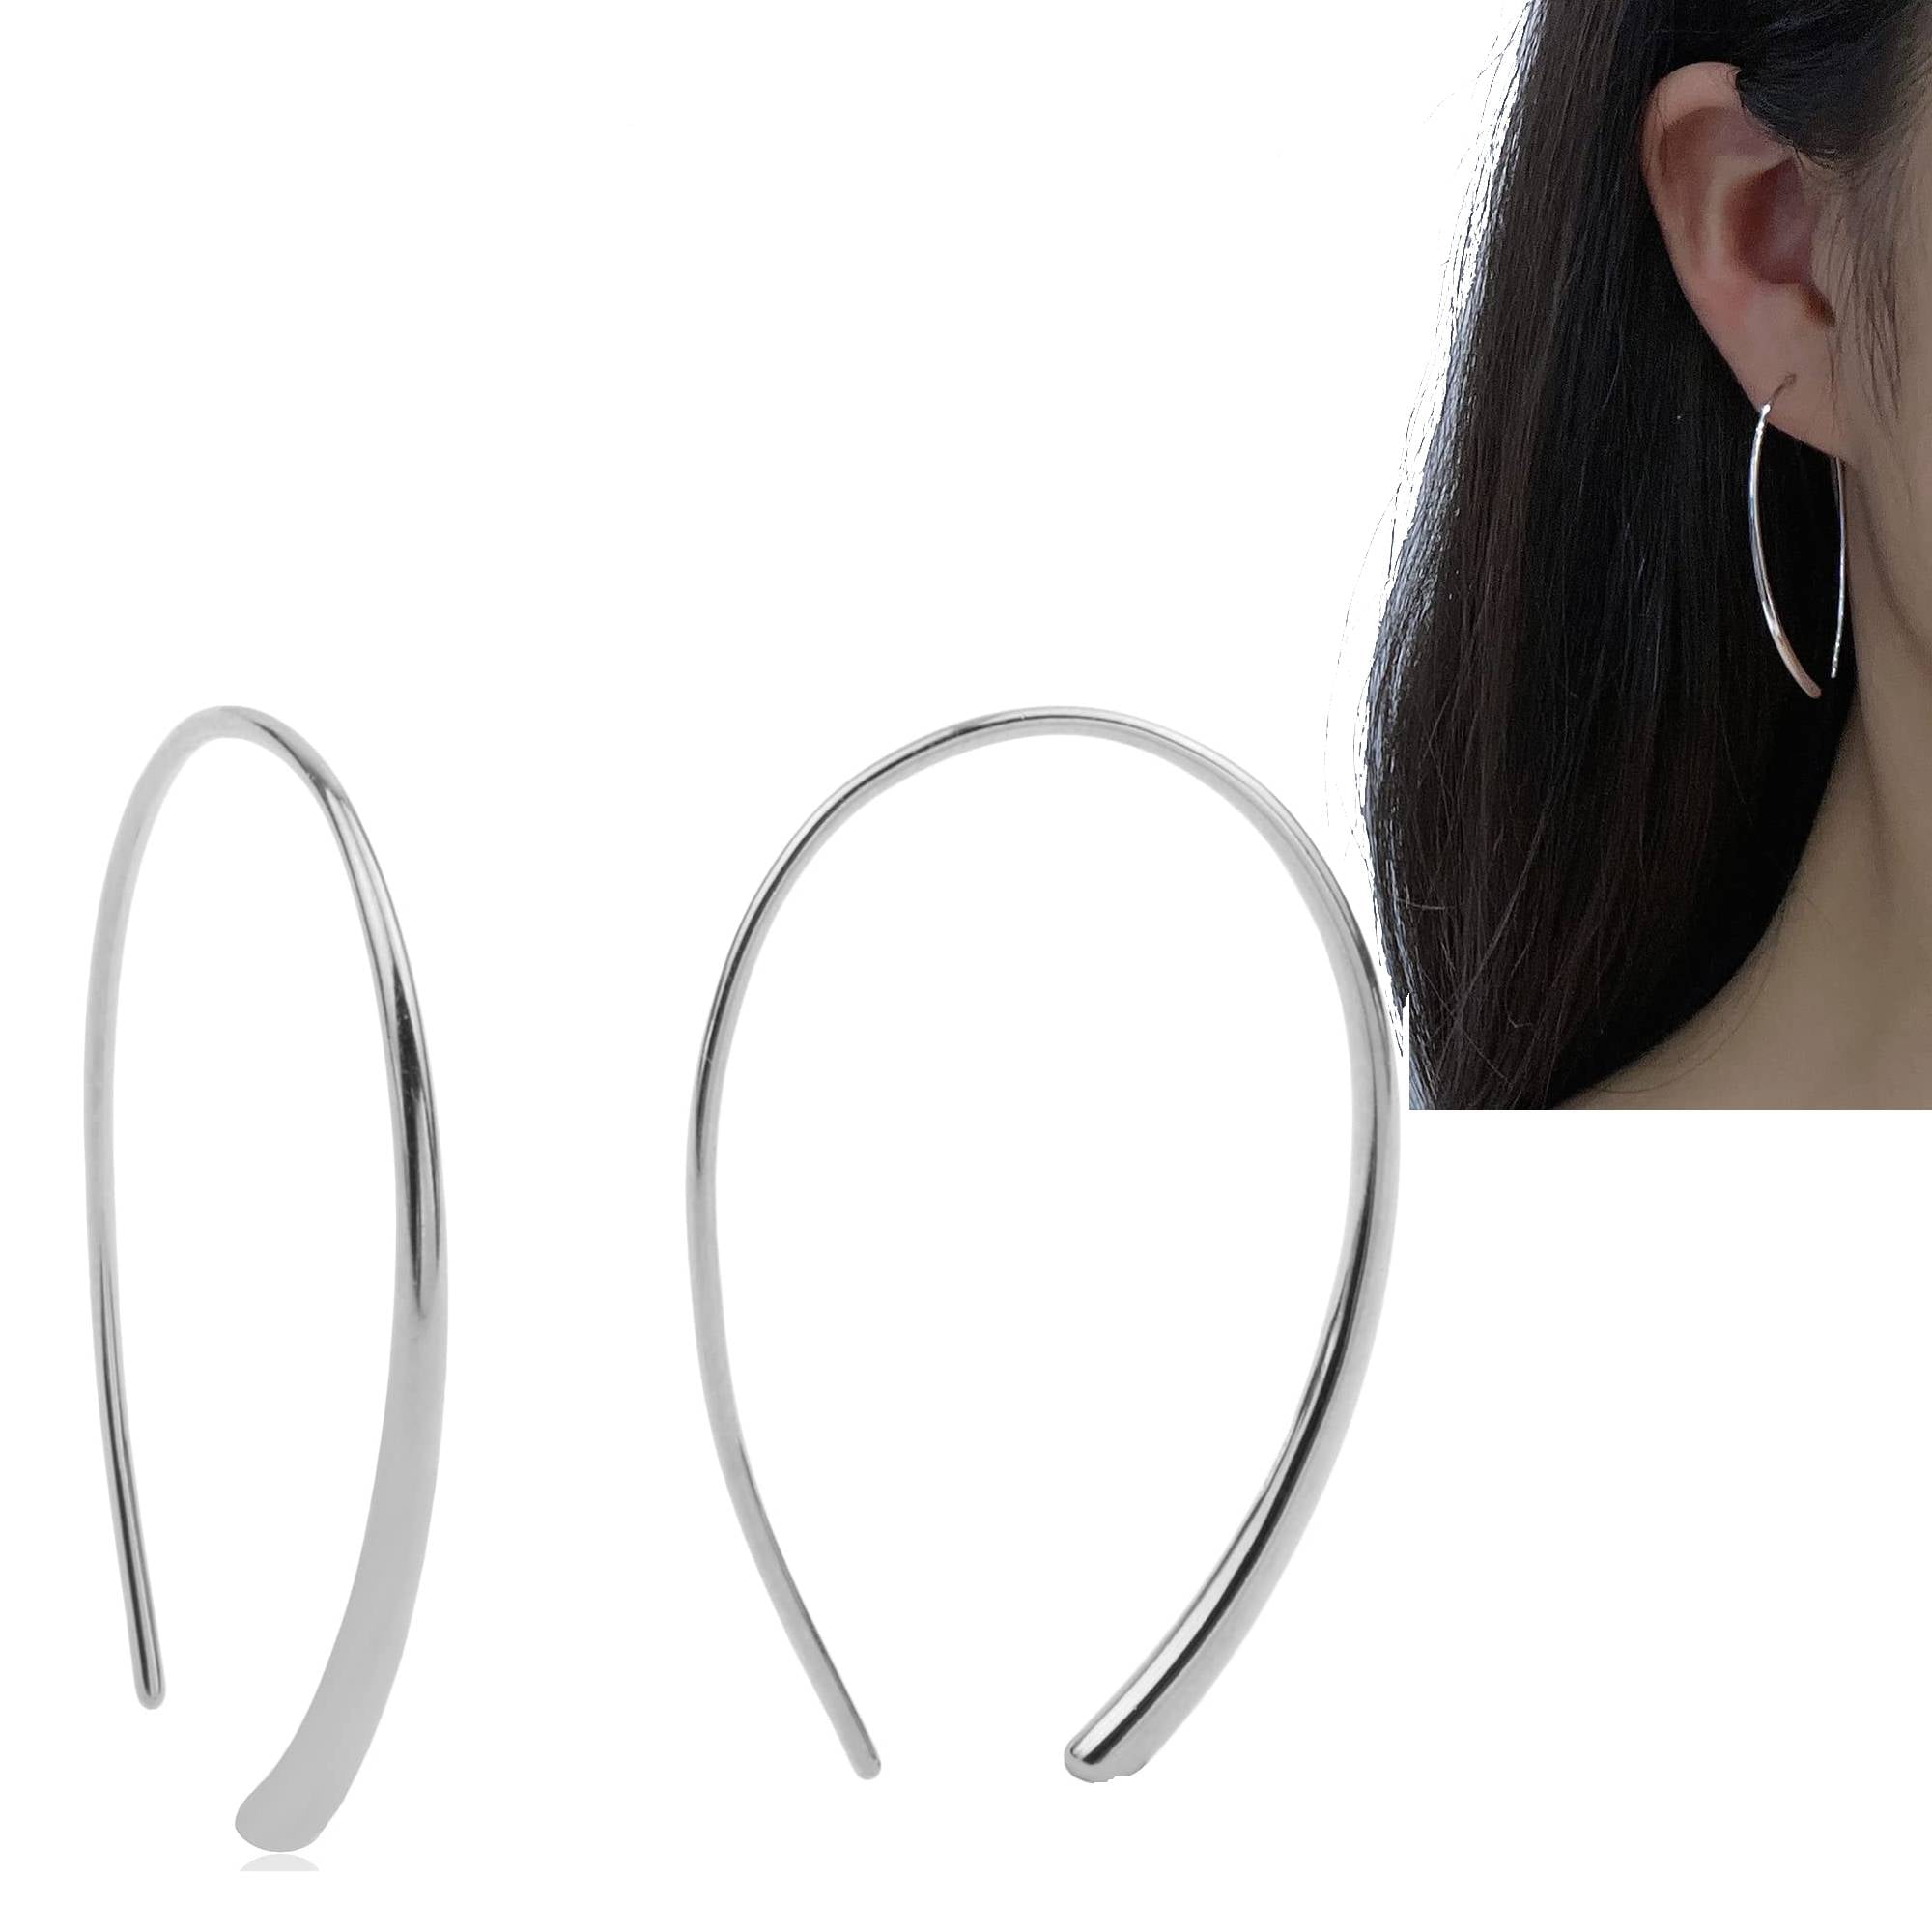 Lovisa Yellow Plastic Open Circle Drop Earrings in 2023